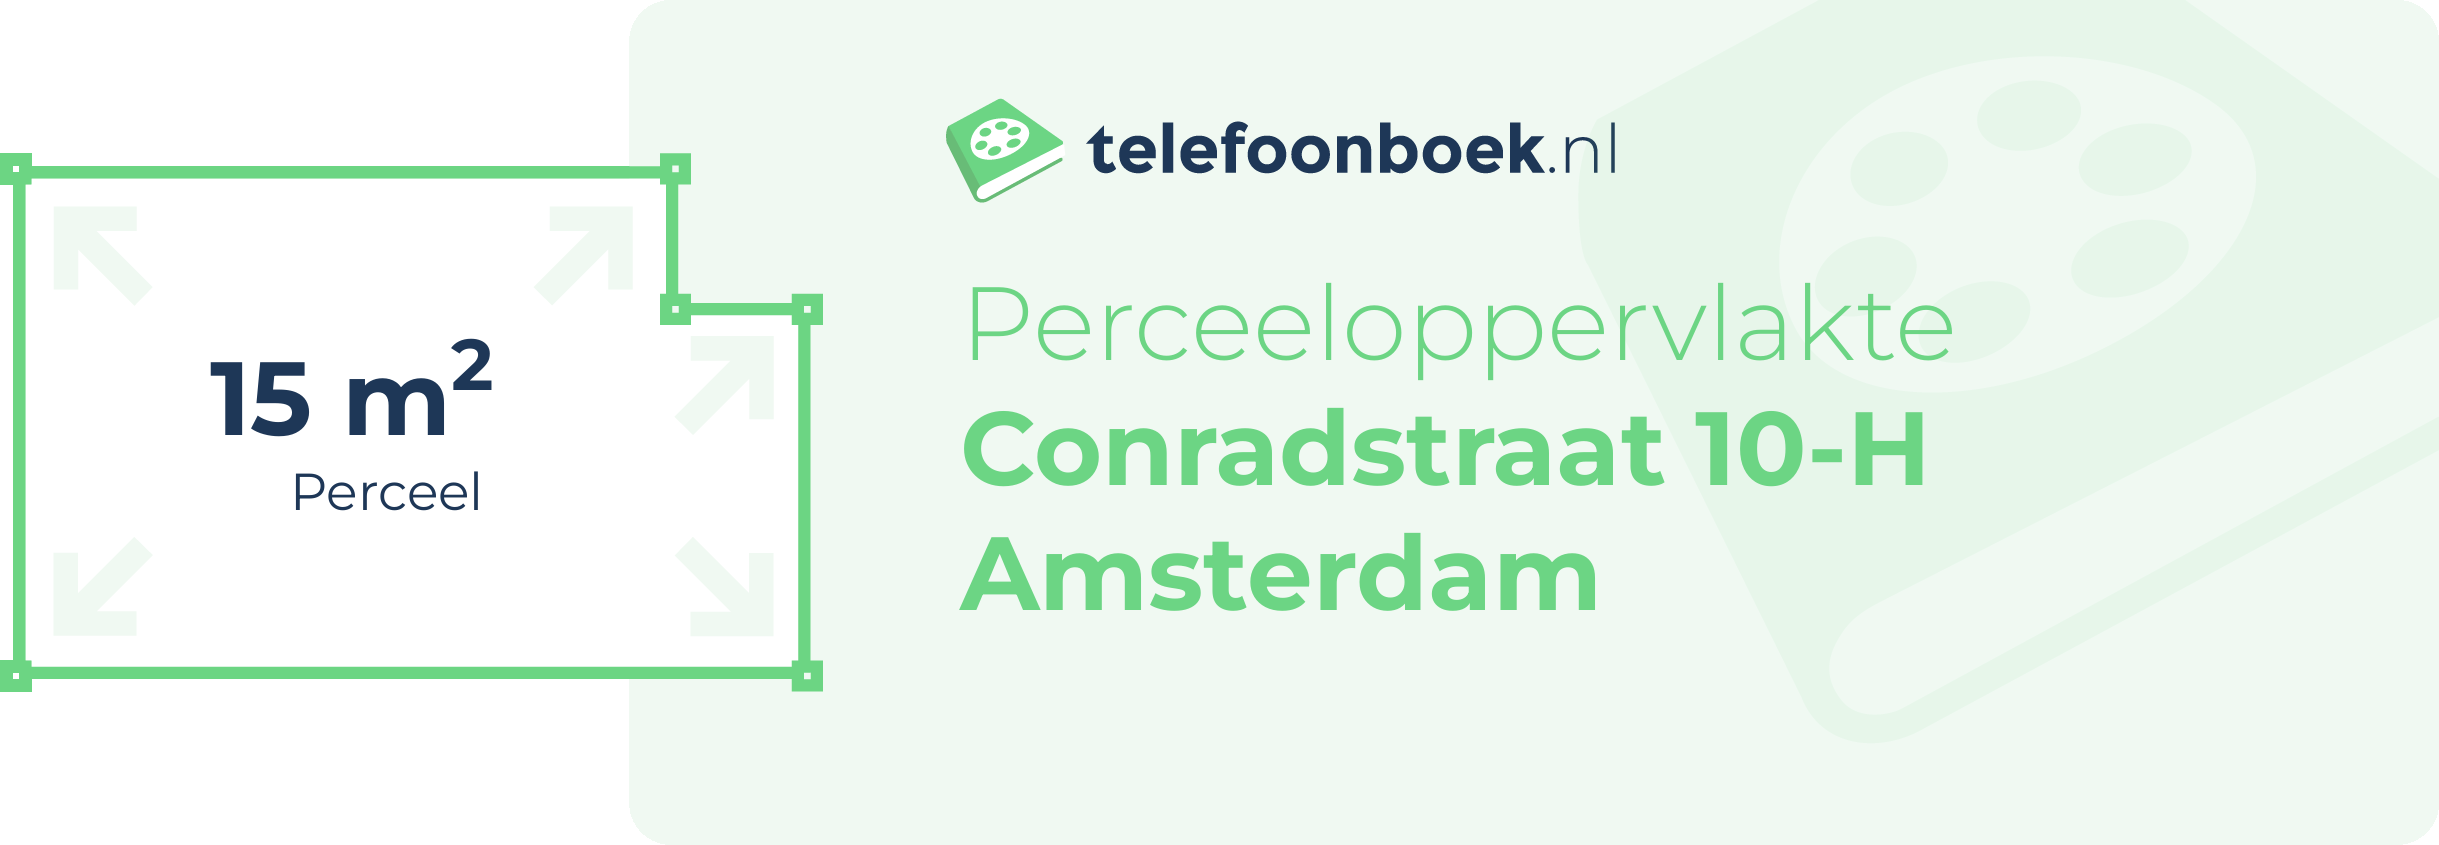 Perceeloppervlakte Conradstraat 10-H Amsterdam